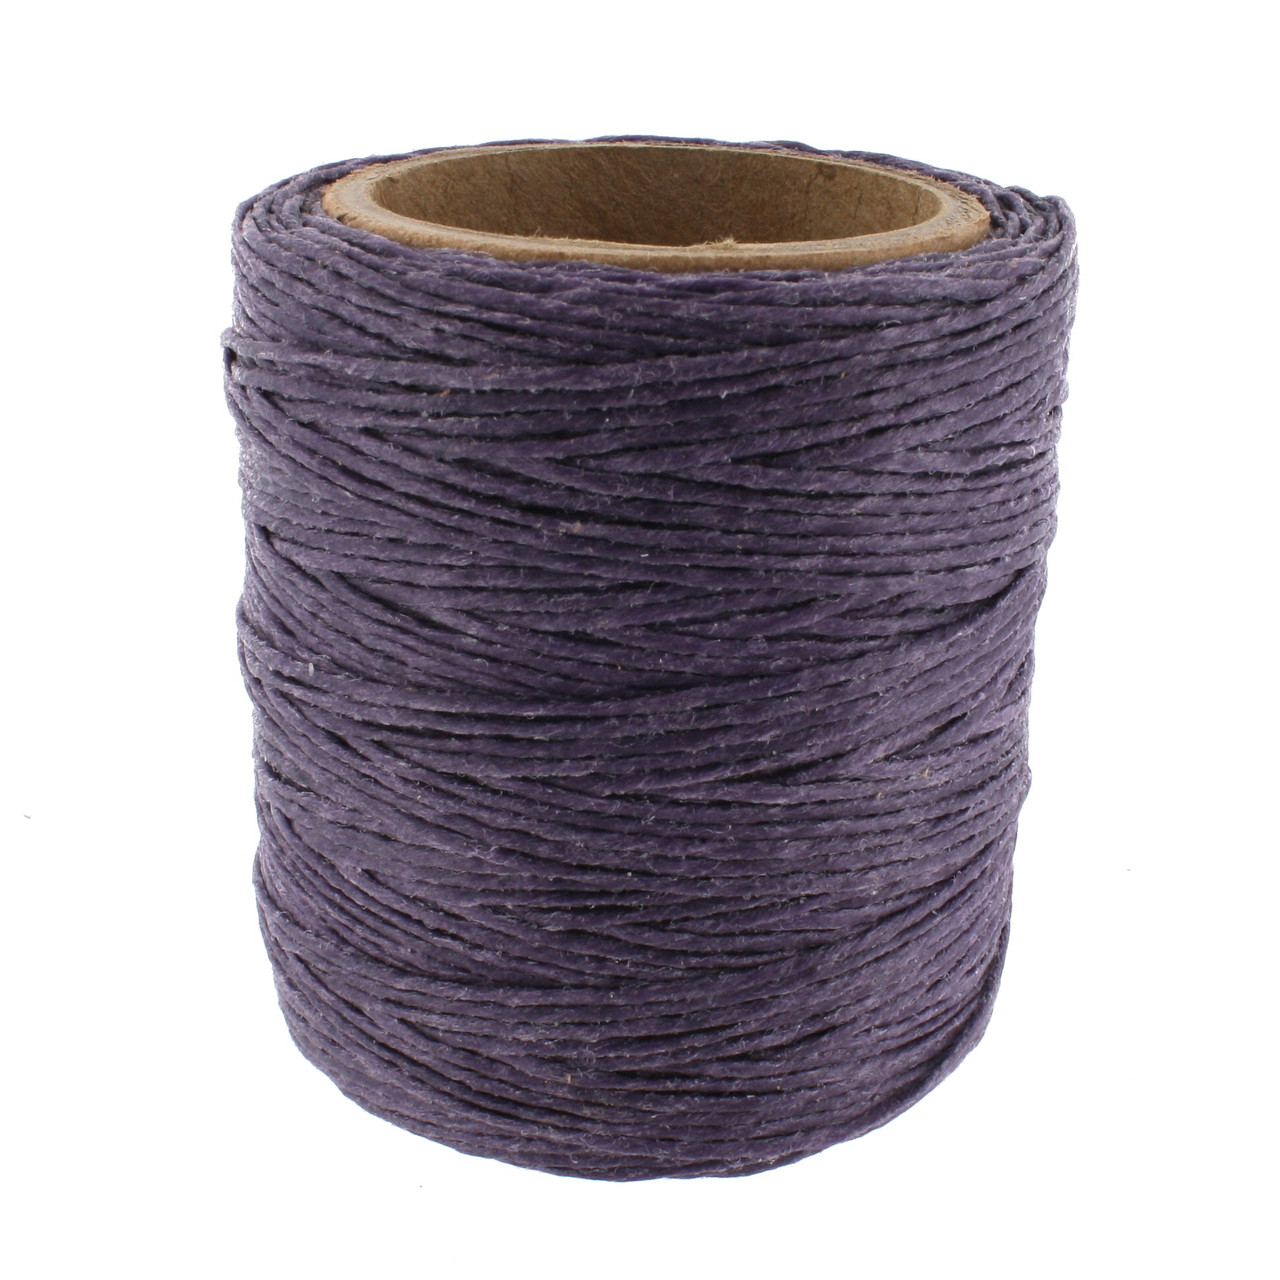 Maine Thread Waxed Cord, 70 yard spool, Lilac - Buckleguy.com